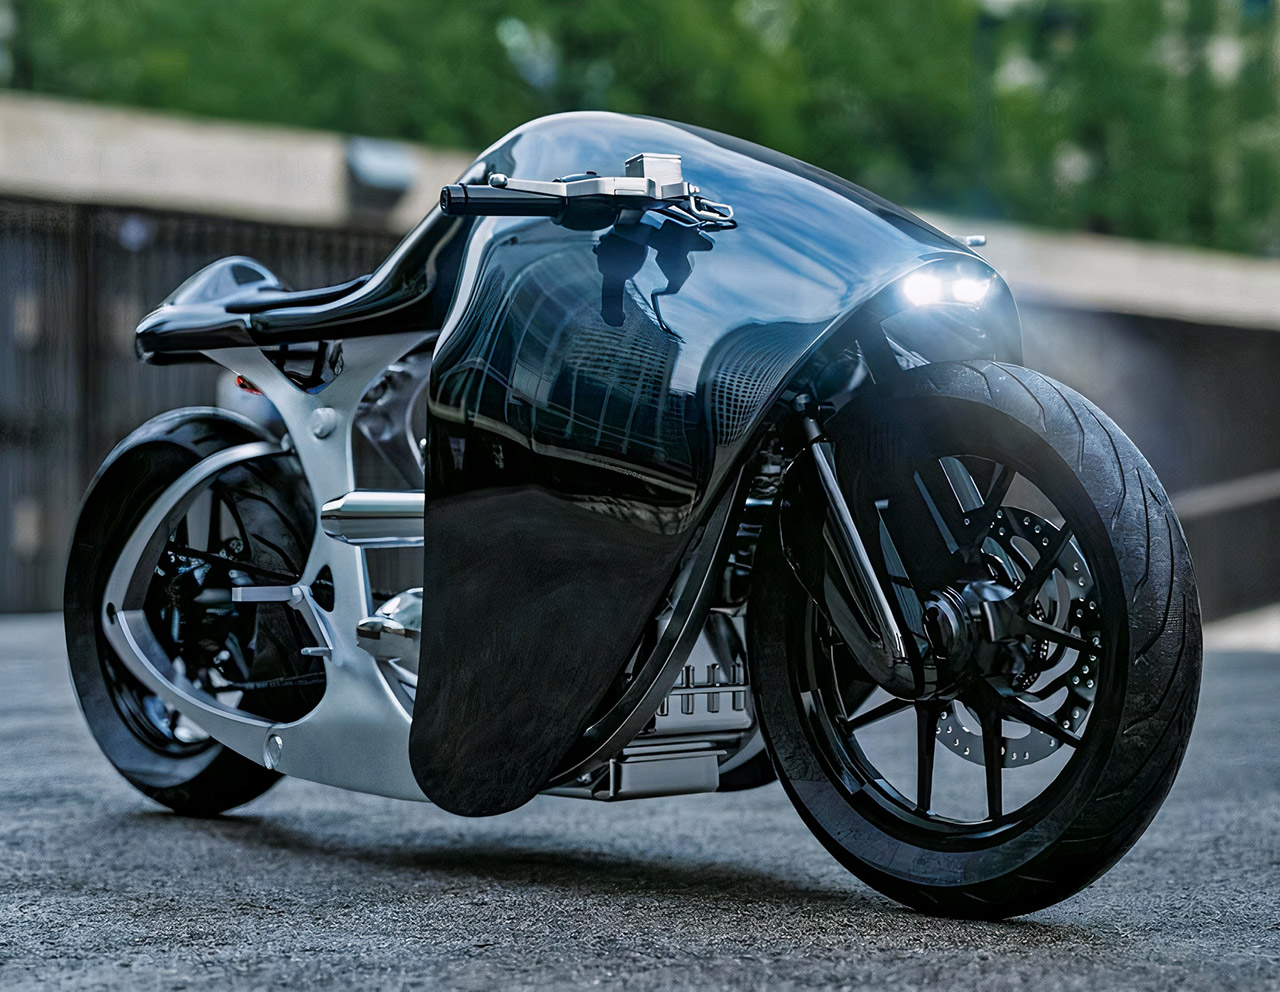 Bandit9 The Supermarine Motorcycle